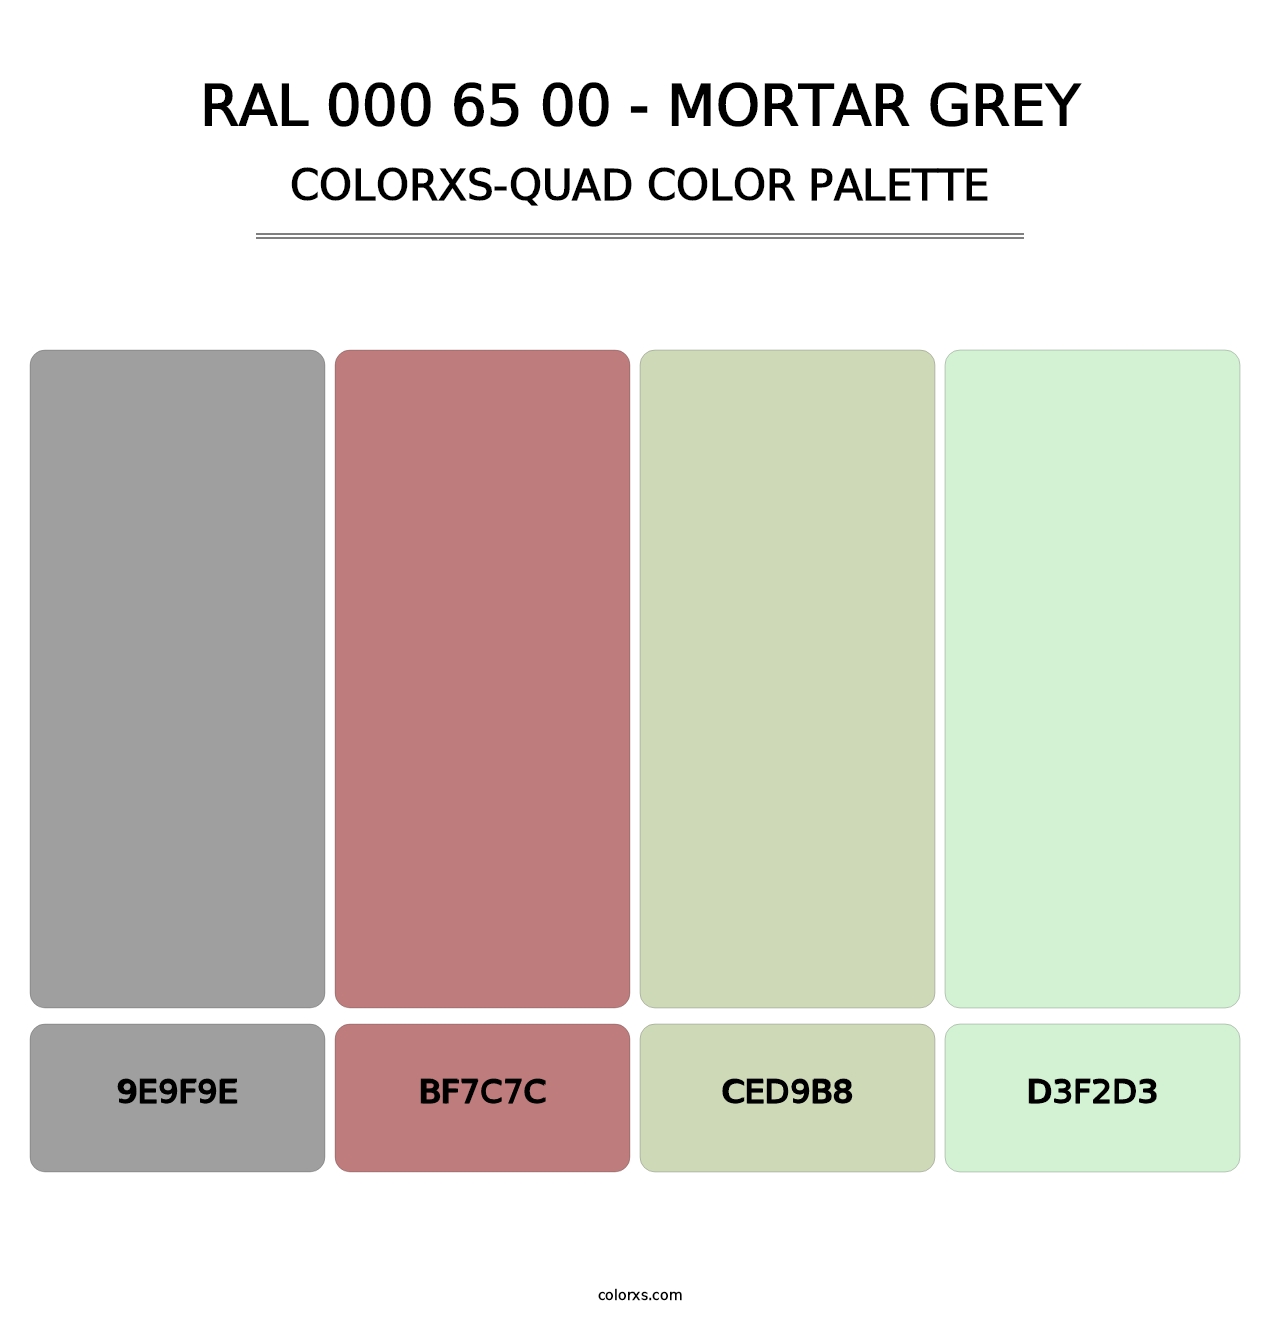 RAL 000 65 00 - Mortar Grey - Colorxs Quad Palette